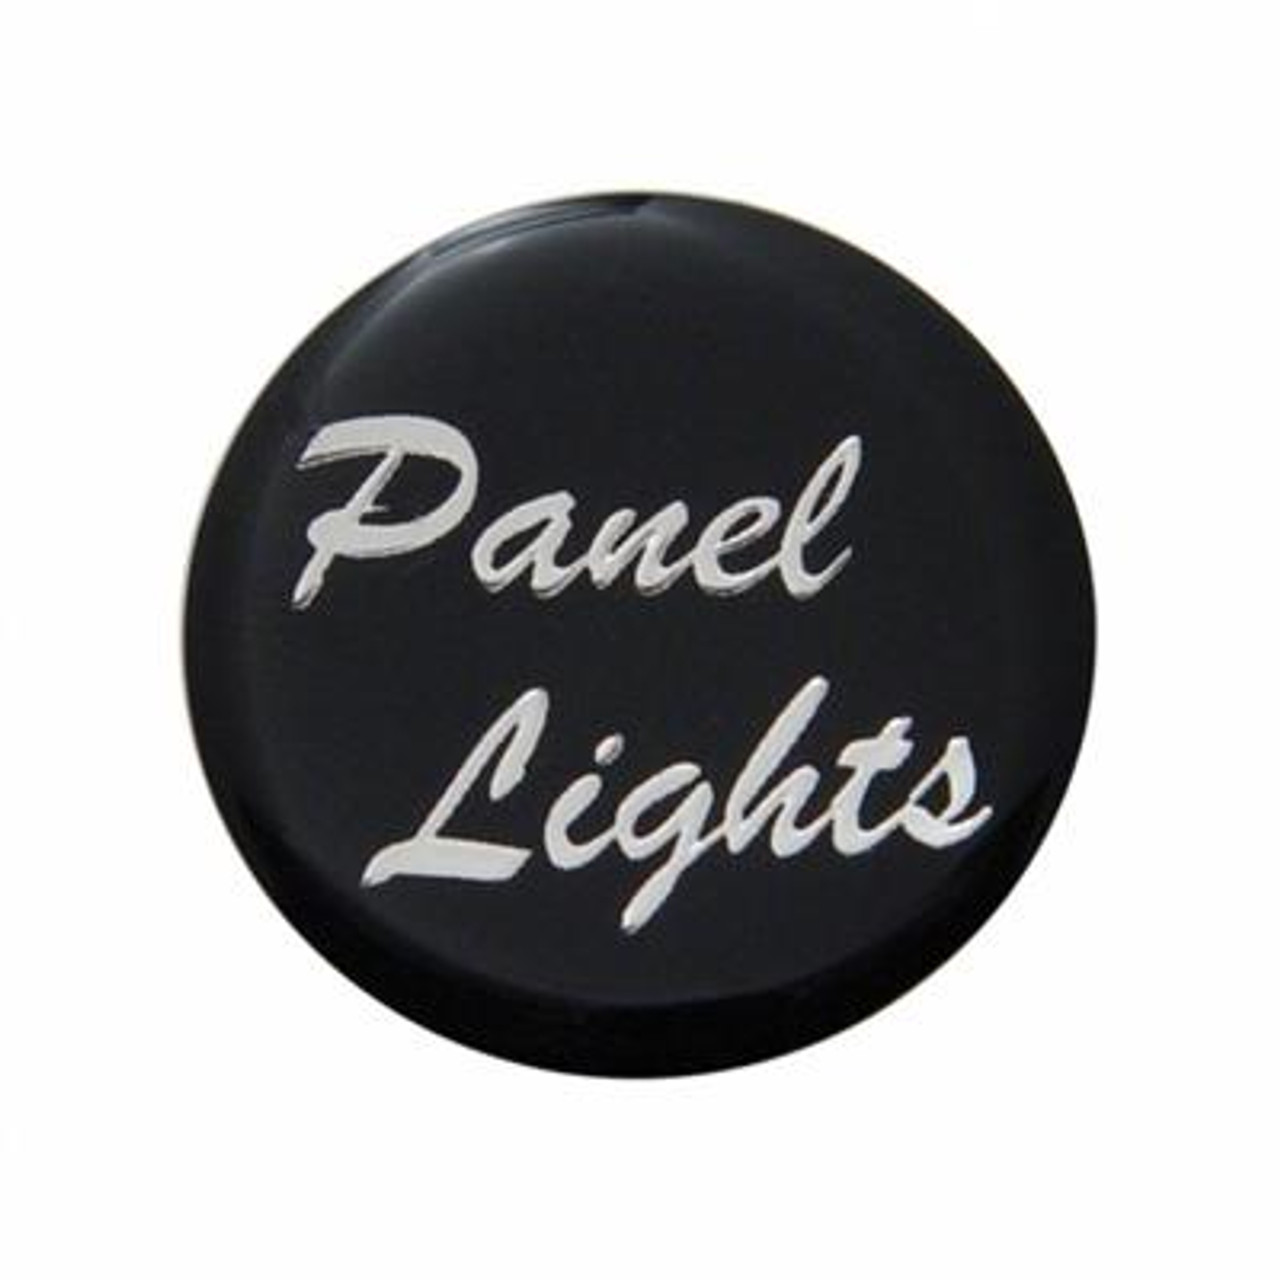 "Panel Lights" Glossy Dash Knob Sticker Only